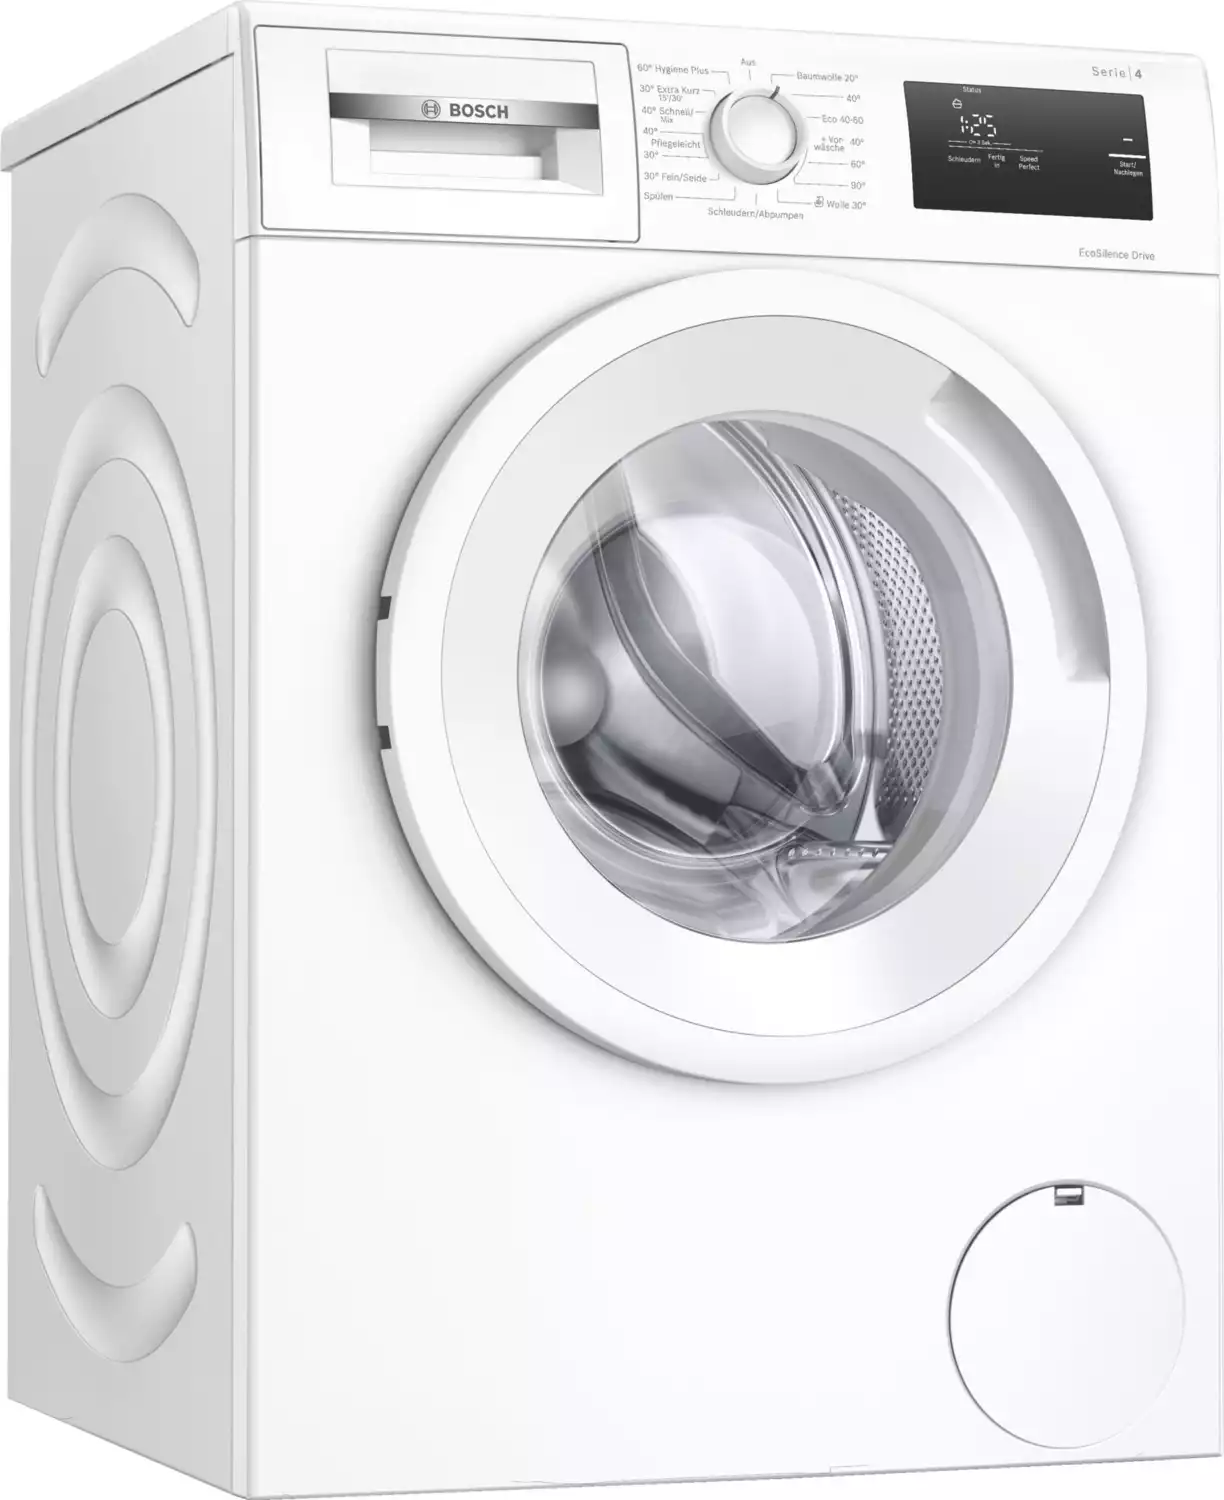 Bosch-pralni-stroj-WAN280A3-aliansa-si-1.jpg.webp